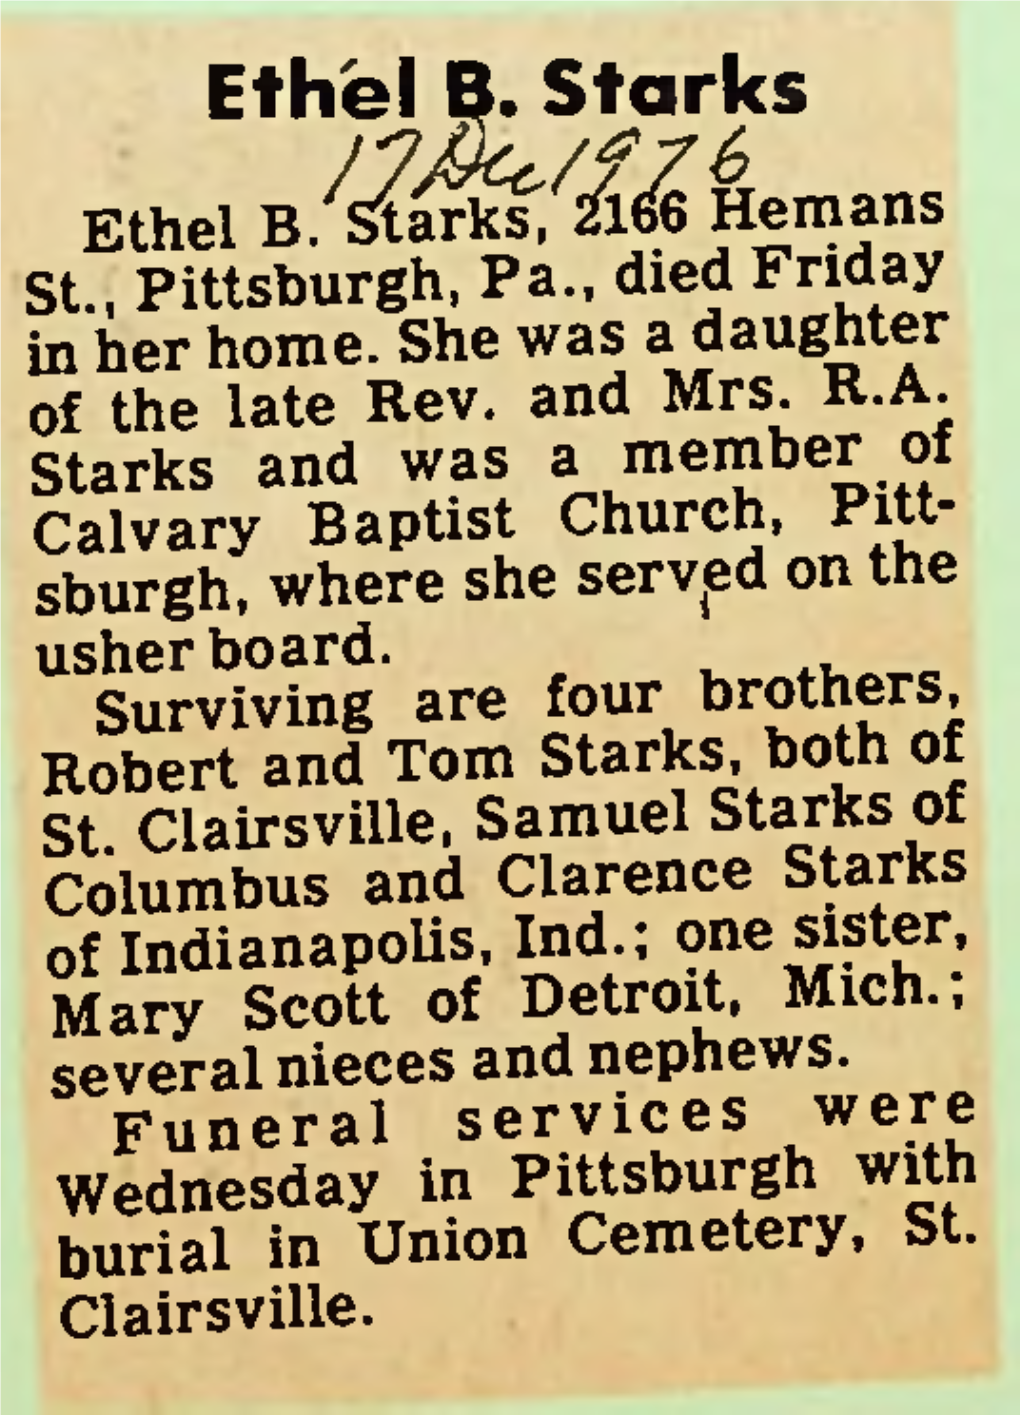 Ethel B. Starks Ethel B.^^Arks,^^Hemans St., Pittsburgh, Pa., Died Friday in Her Home